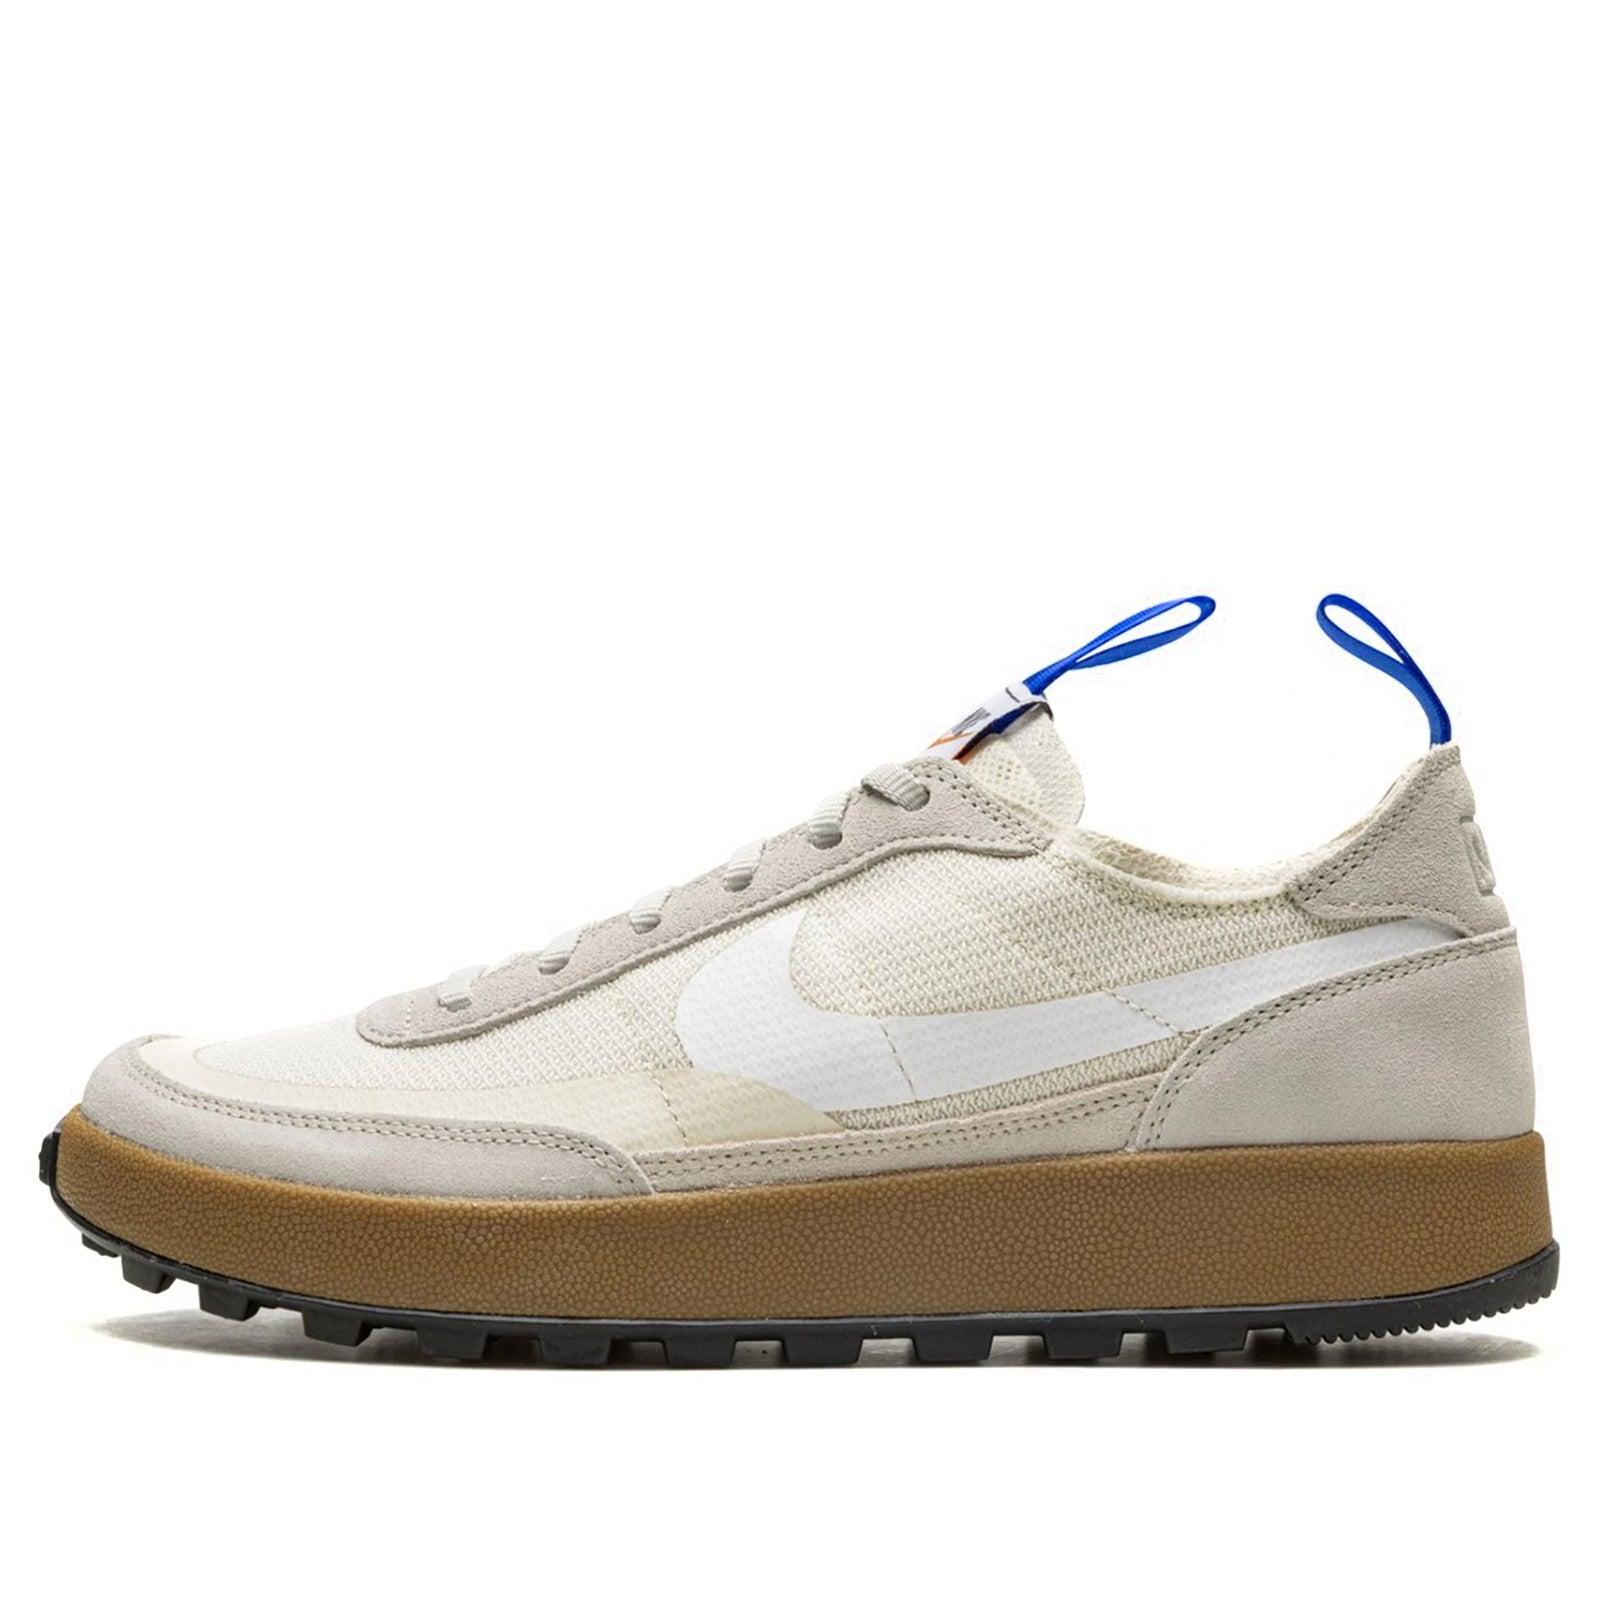 Nike Craft General Purpose Shoe X Tom Sachs in White | Lyst